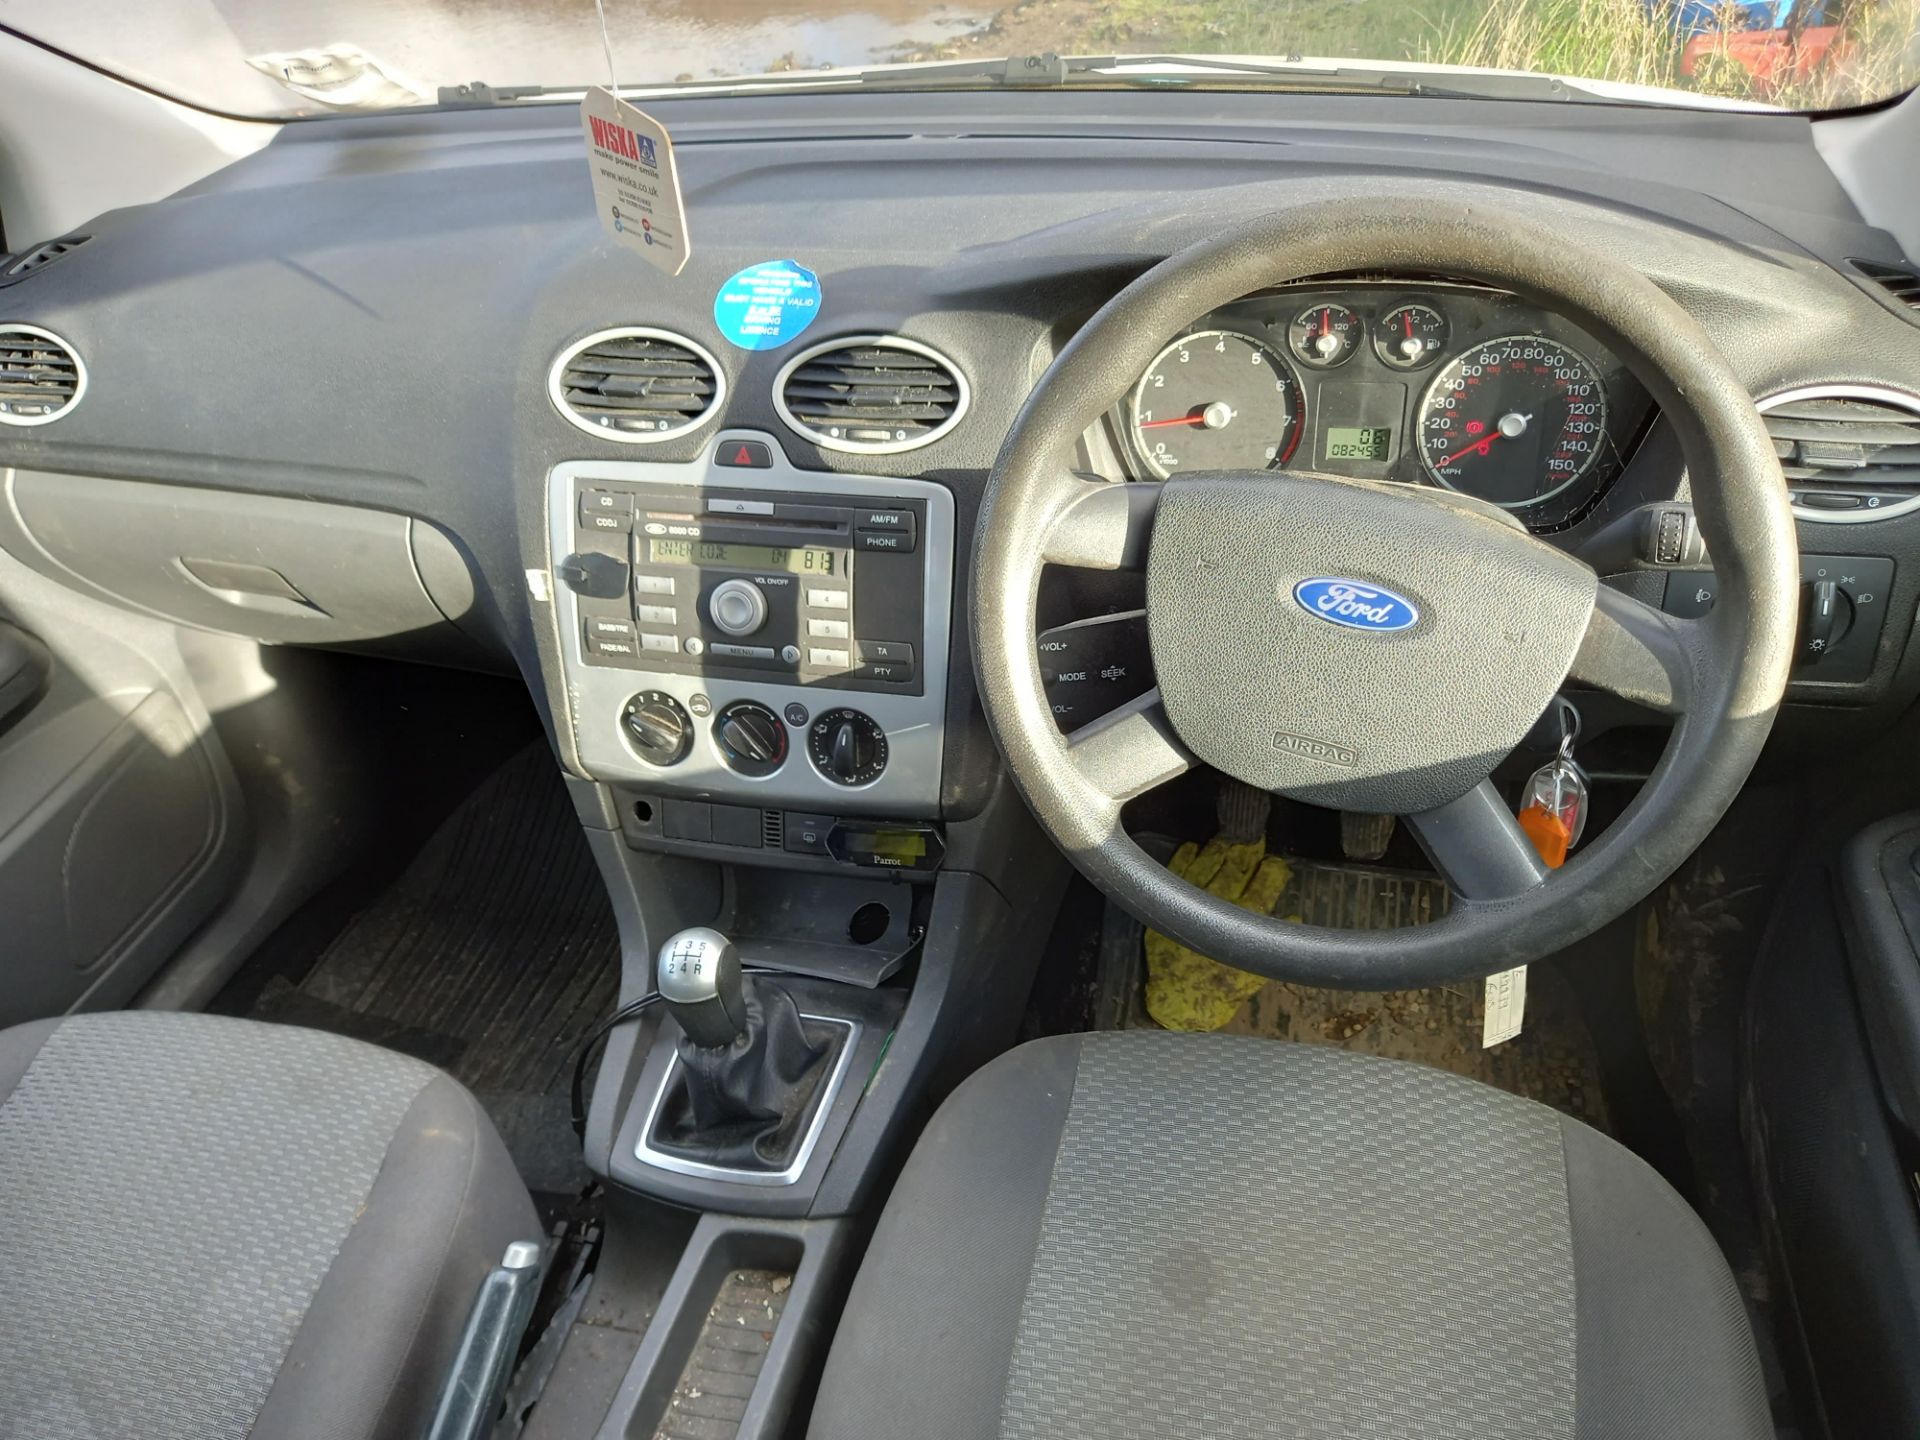 2005 Ford Focus LX Estate Car - Image 6 of 9